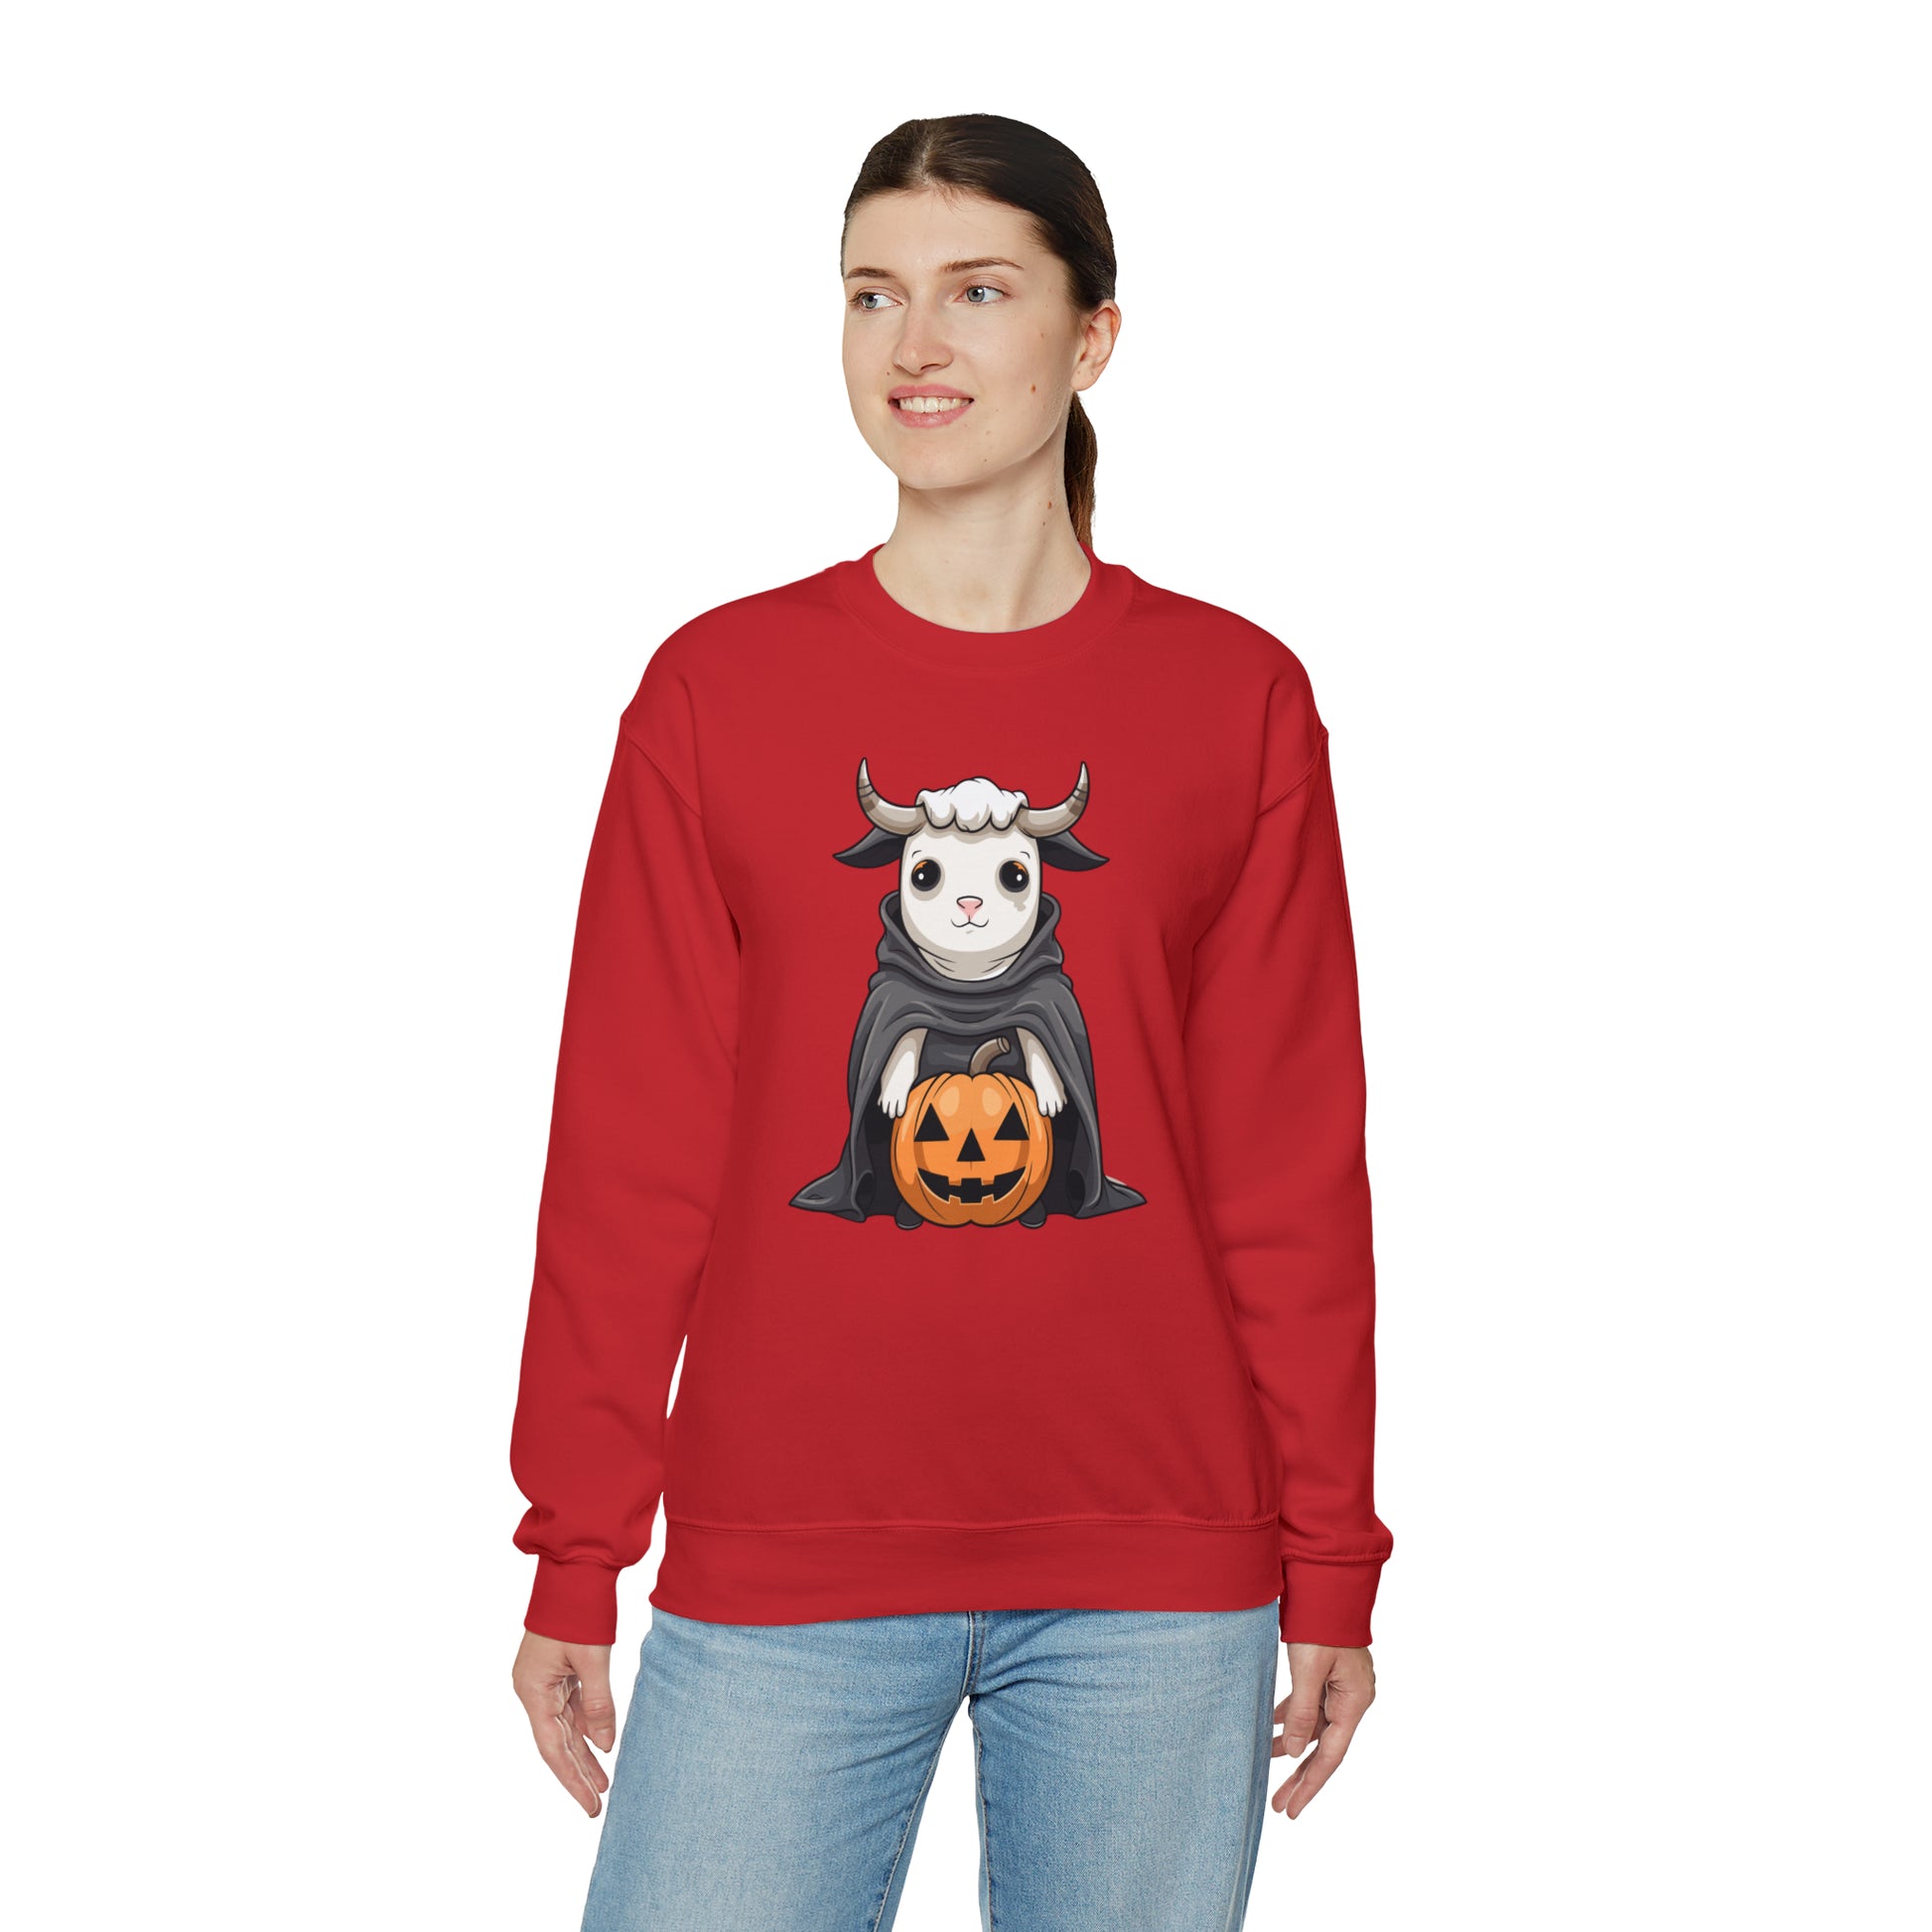 Ghost Cow Sweatshirt, Pumpkin Halloween Graphic Crewneck Fleece Cotton Sweater Jumper Pullover Men Women Adult Aesthetic Designer Top Starcove Fashion